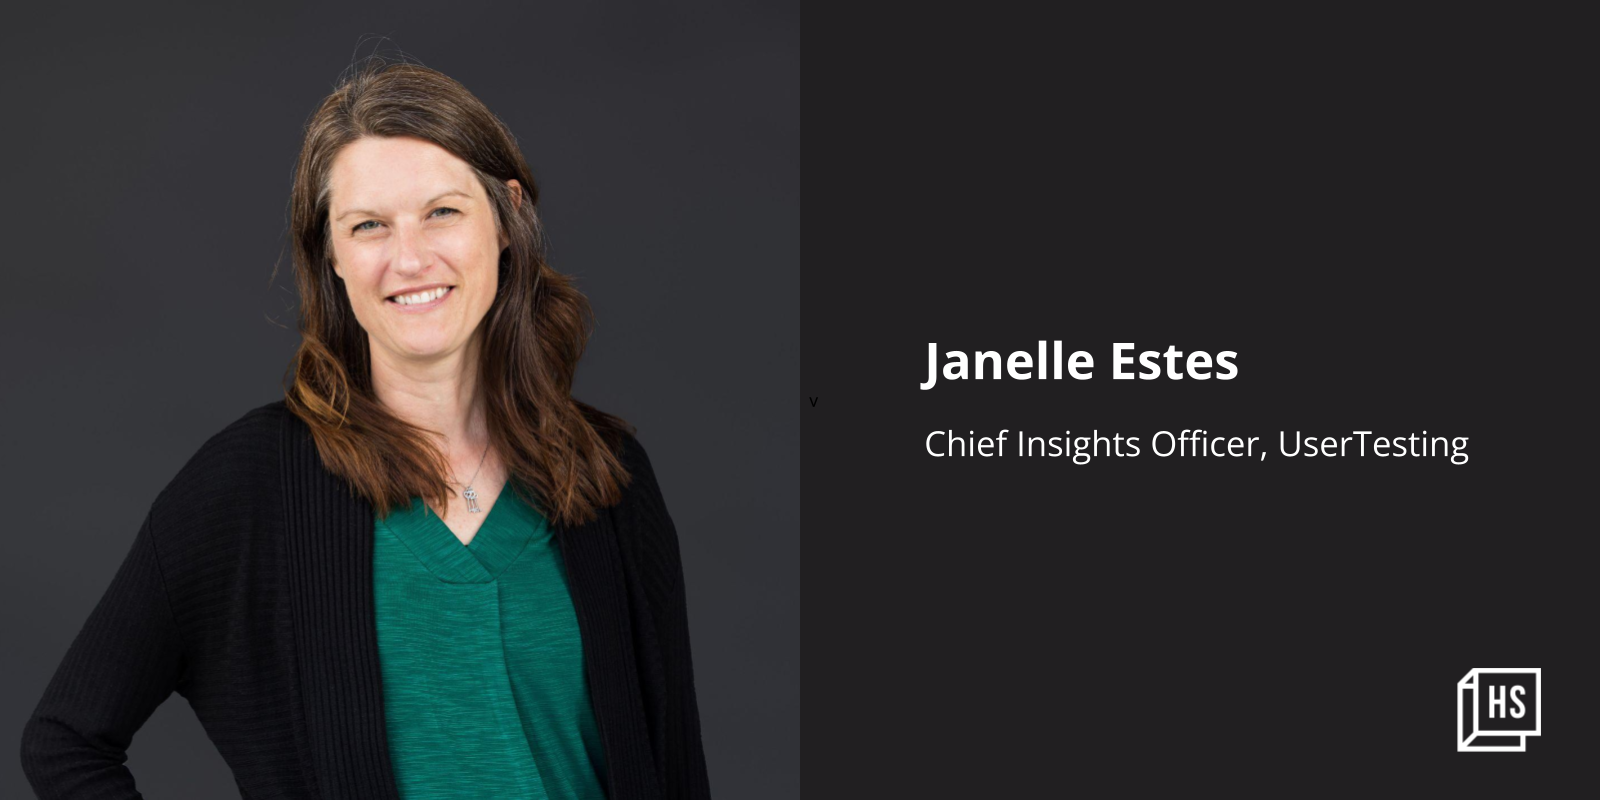 Women need more sponsorship, not just mentorship, says Janelle Estes of UserTesting

